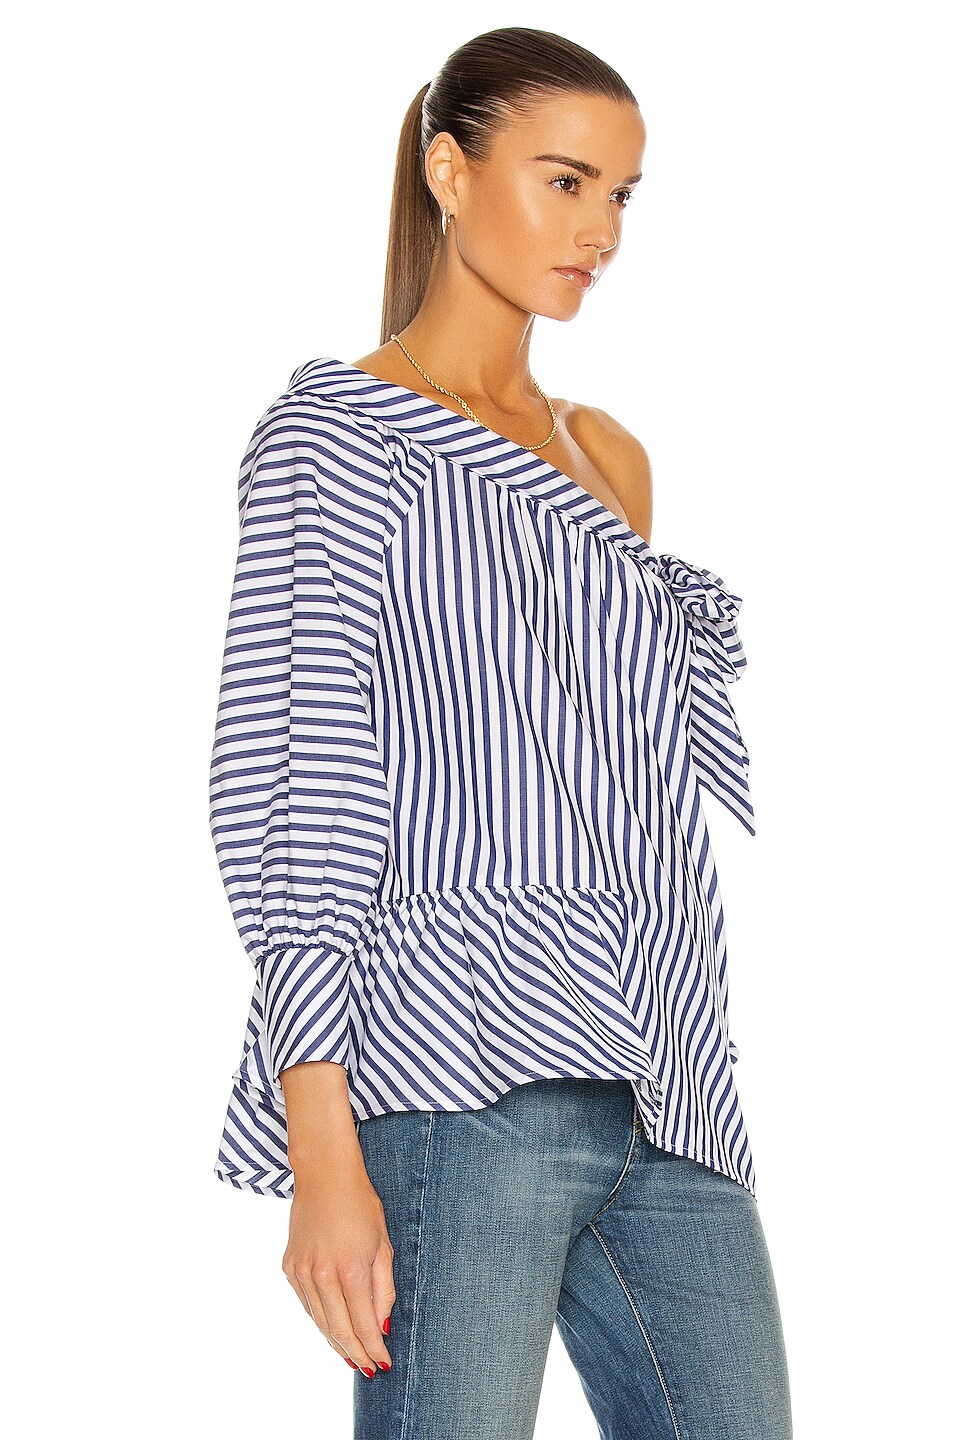 SILVIA TCHERASSI Parigi Shirt in Blue Stripes | FWRD